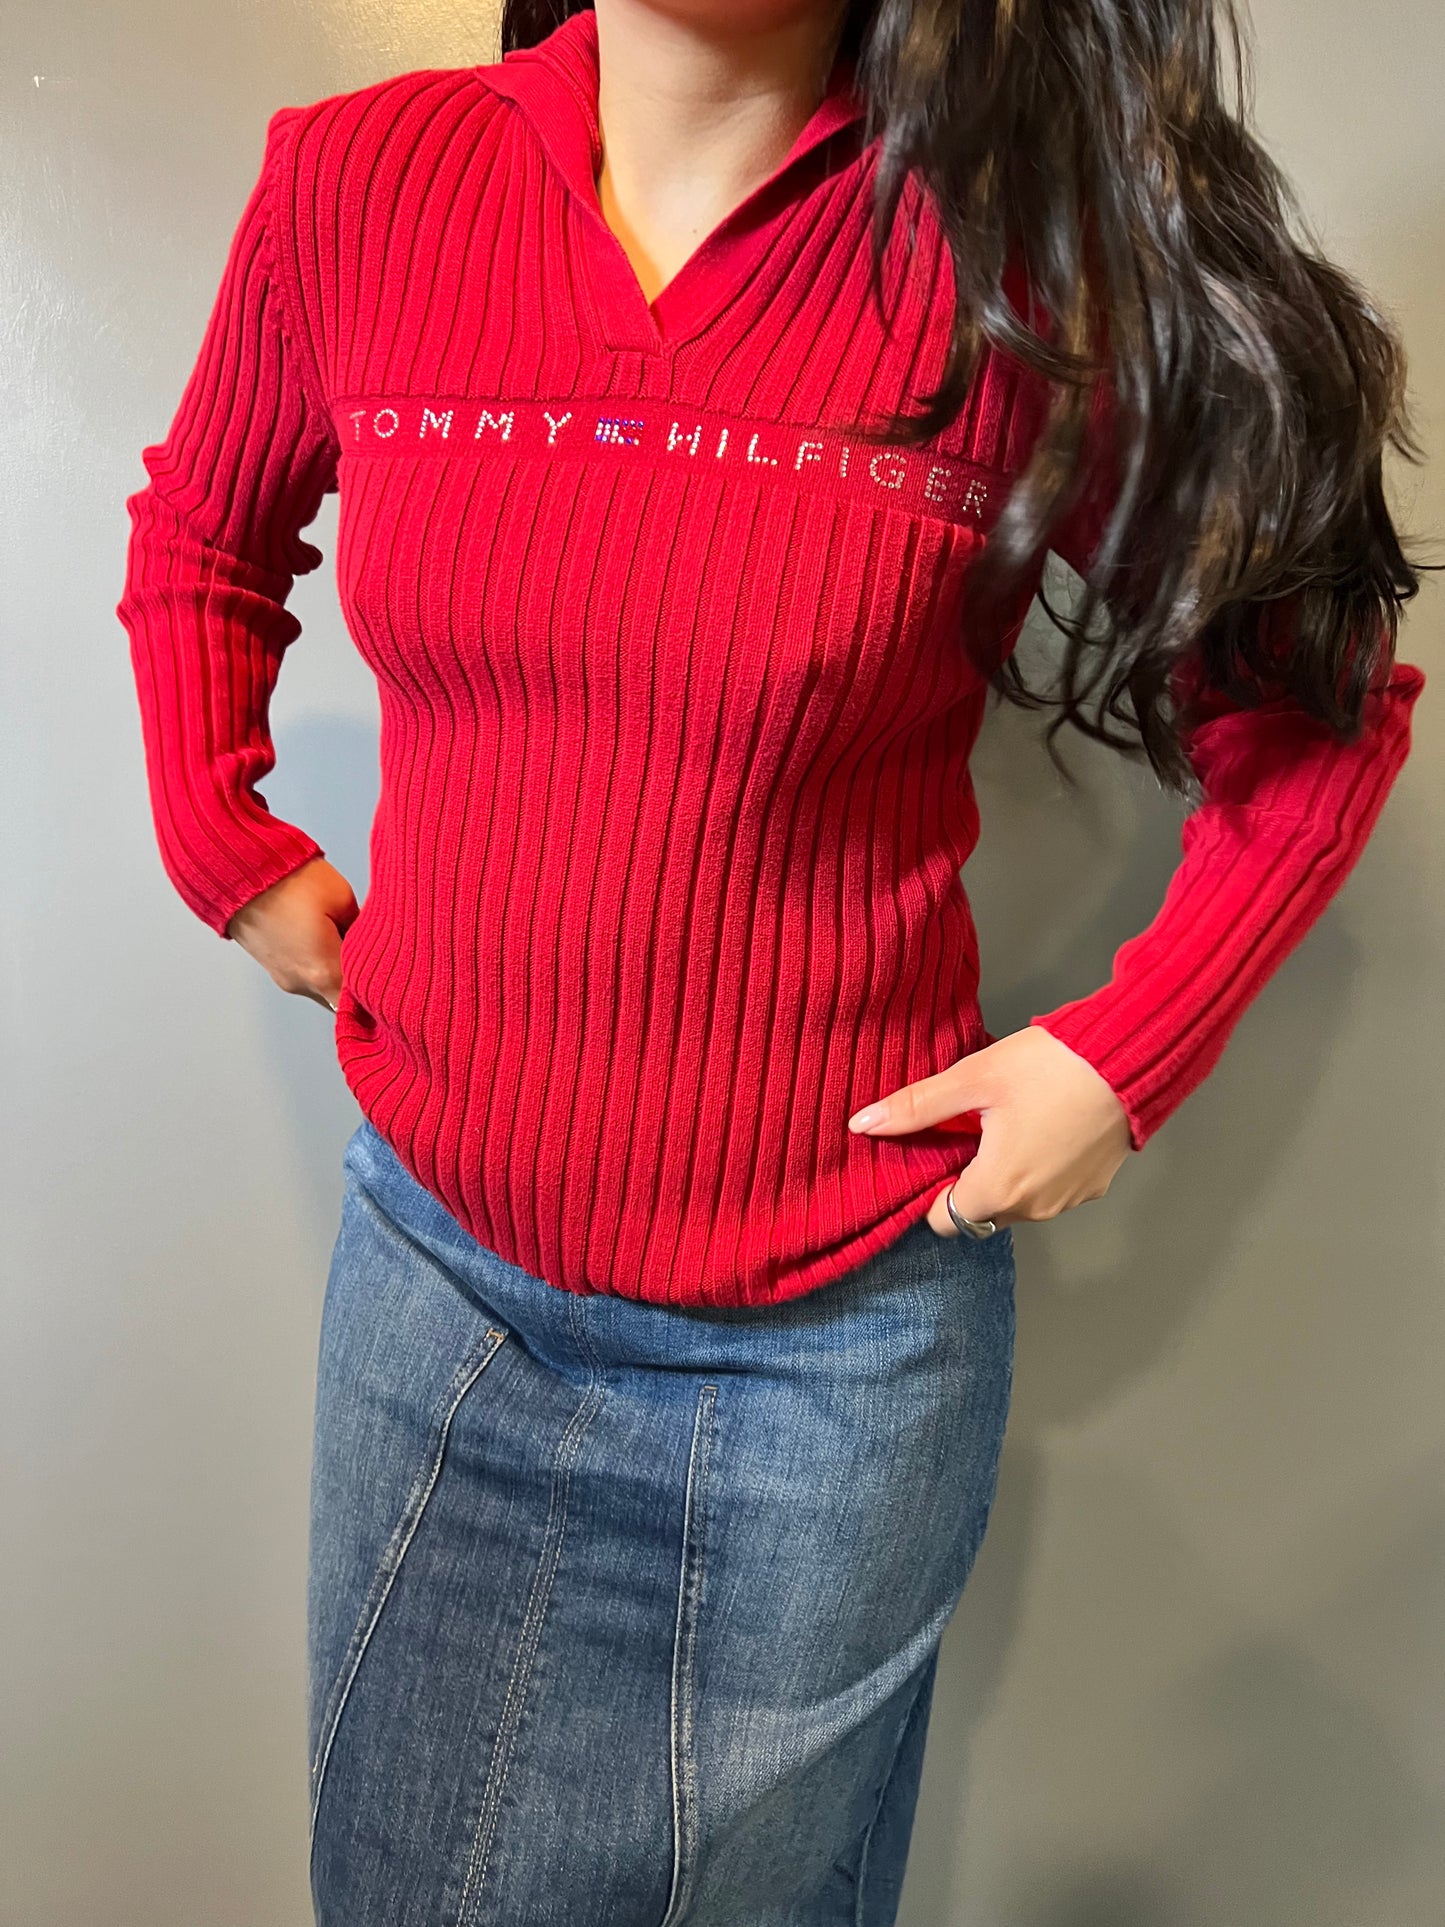 Tommy Hilfiger Knit Sweater - XS/S